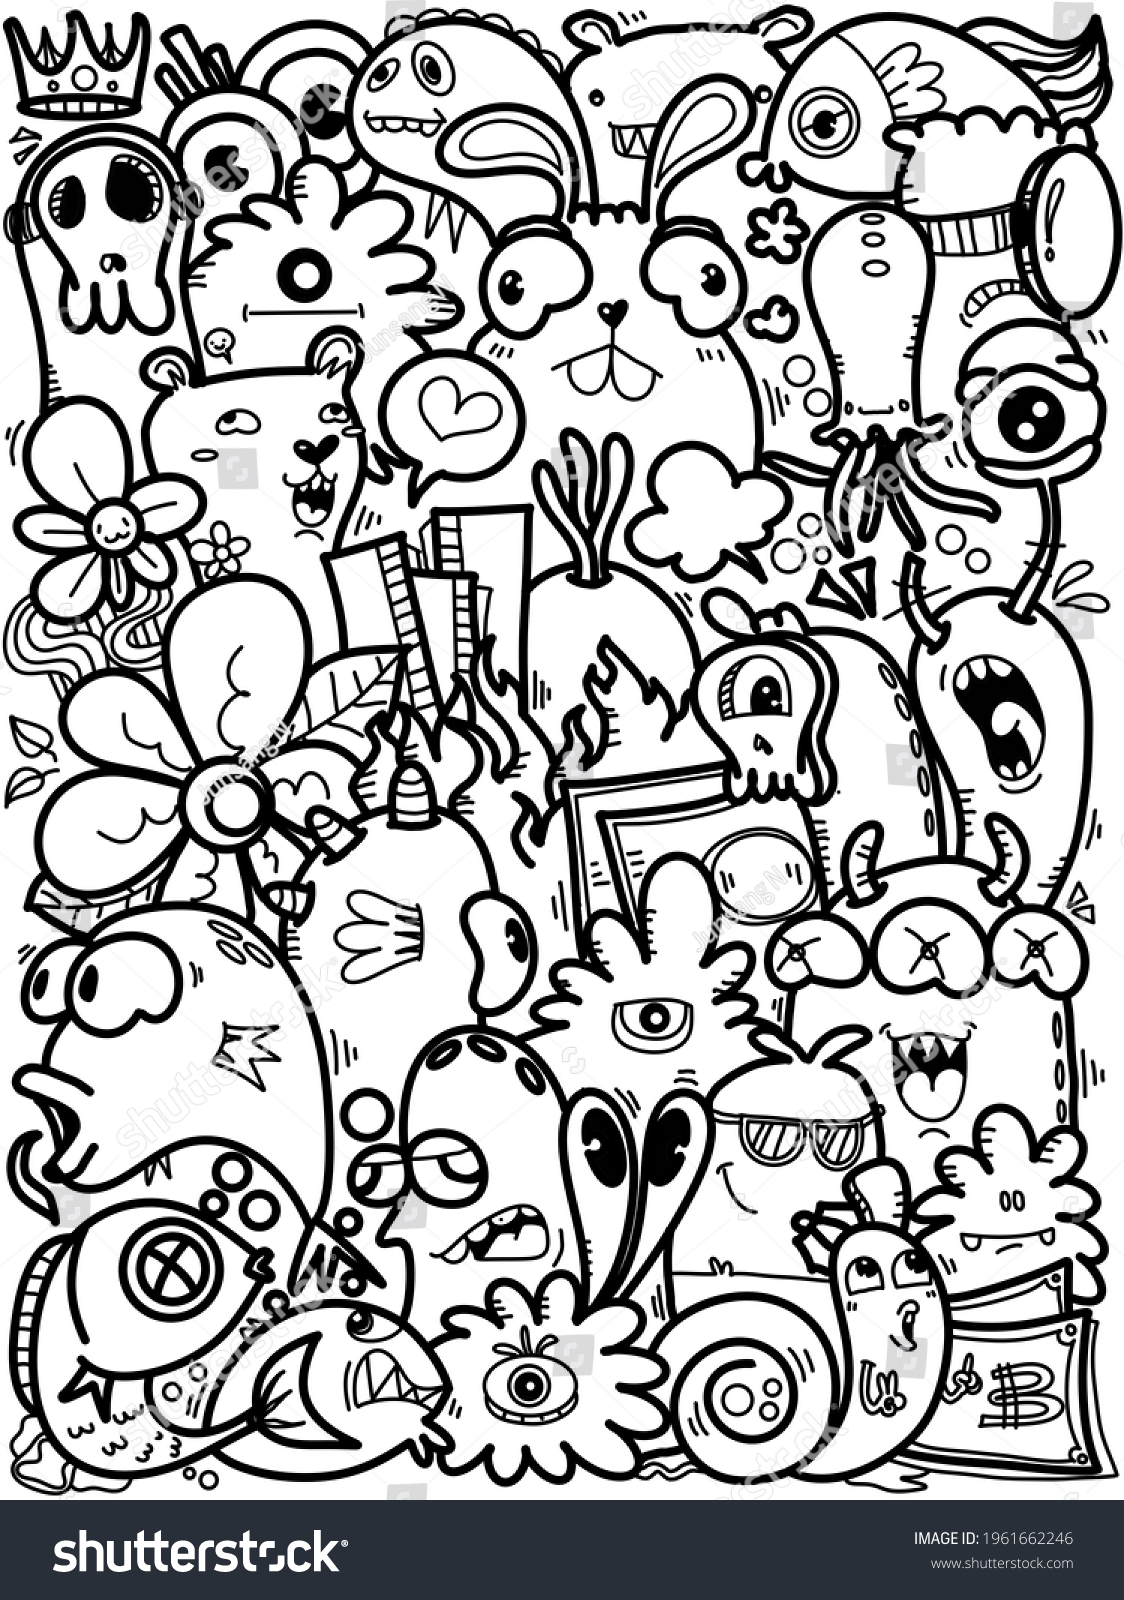 Handdrawn Illustrations Monsters Doodle Hand Drawn Stock Illustration ...